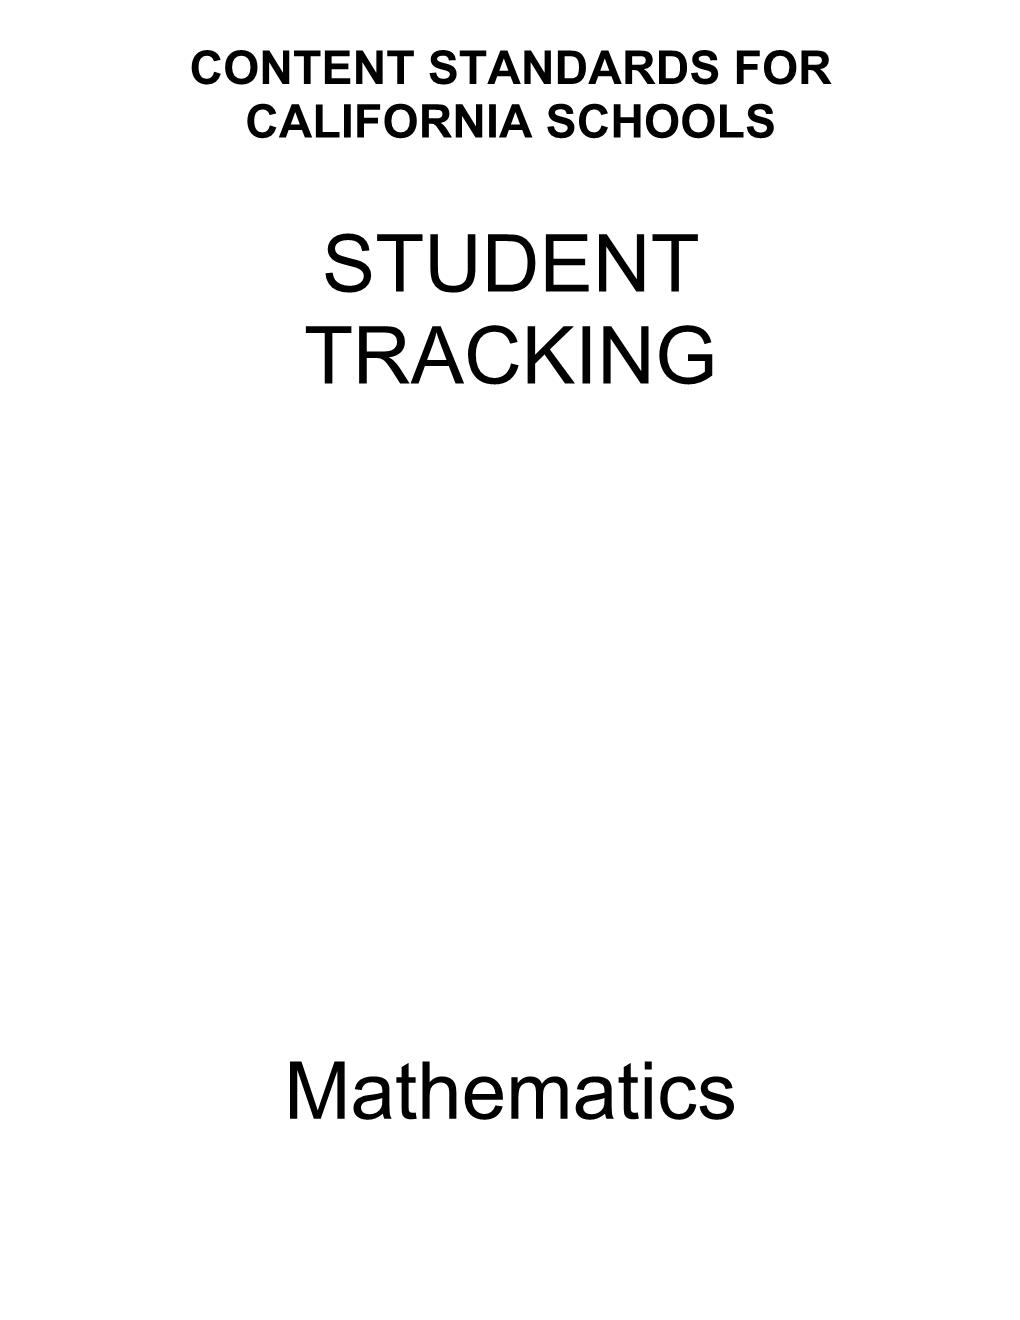 Math - Student Record Sheet